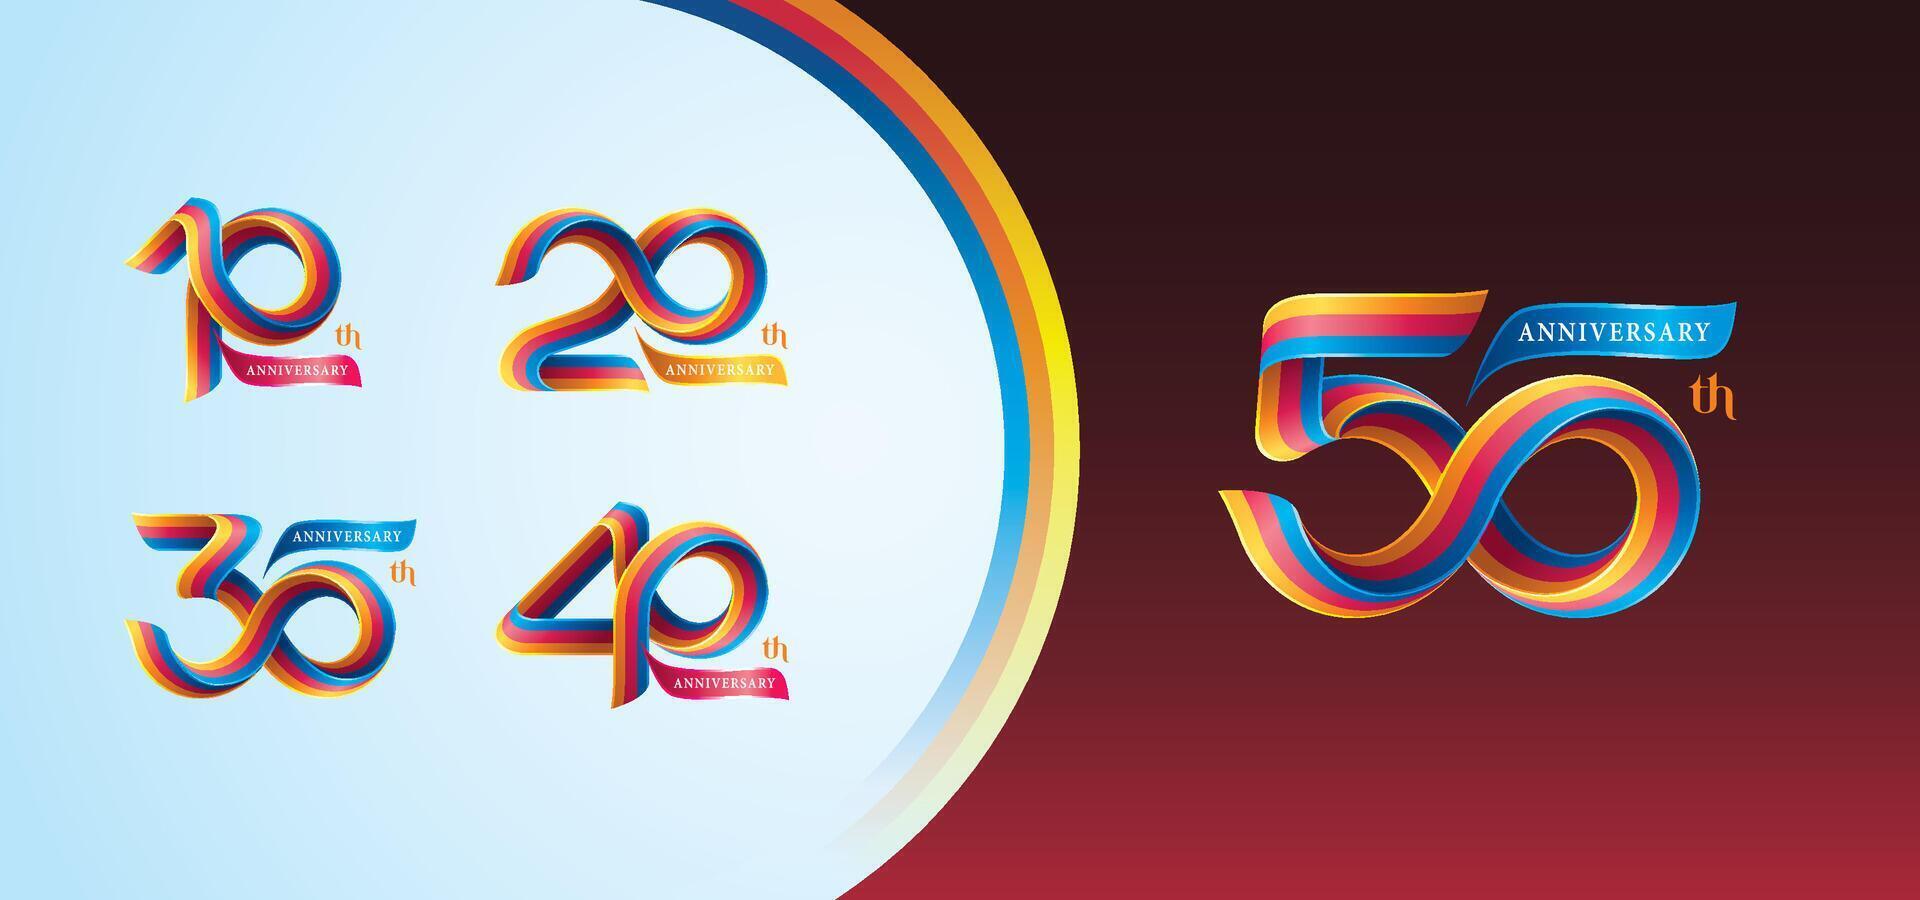 conjunto de 10 a 50 años aniversario vistoso logotipo diseño, 10,20,30,40,50 año, resumen giro infinito múltiple línea arco iris cinta. vector